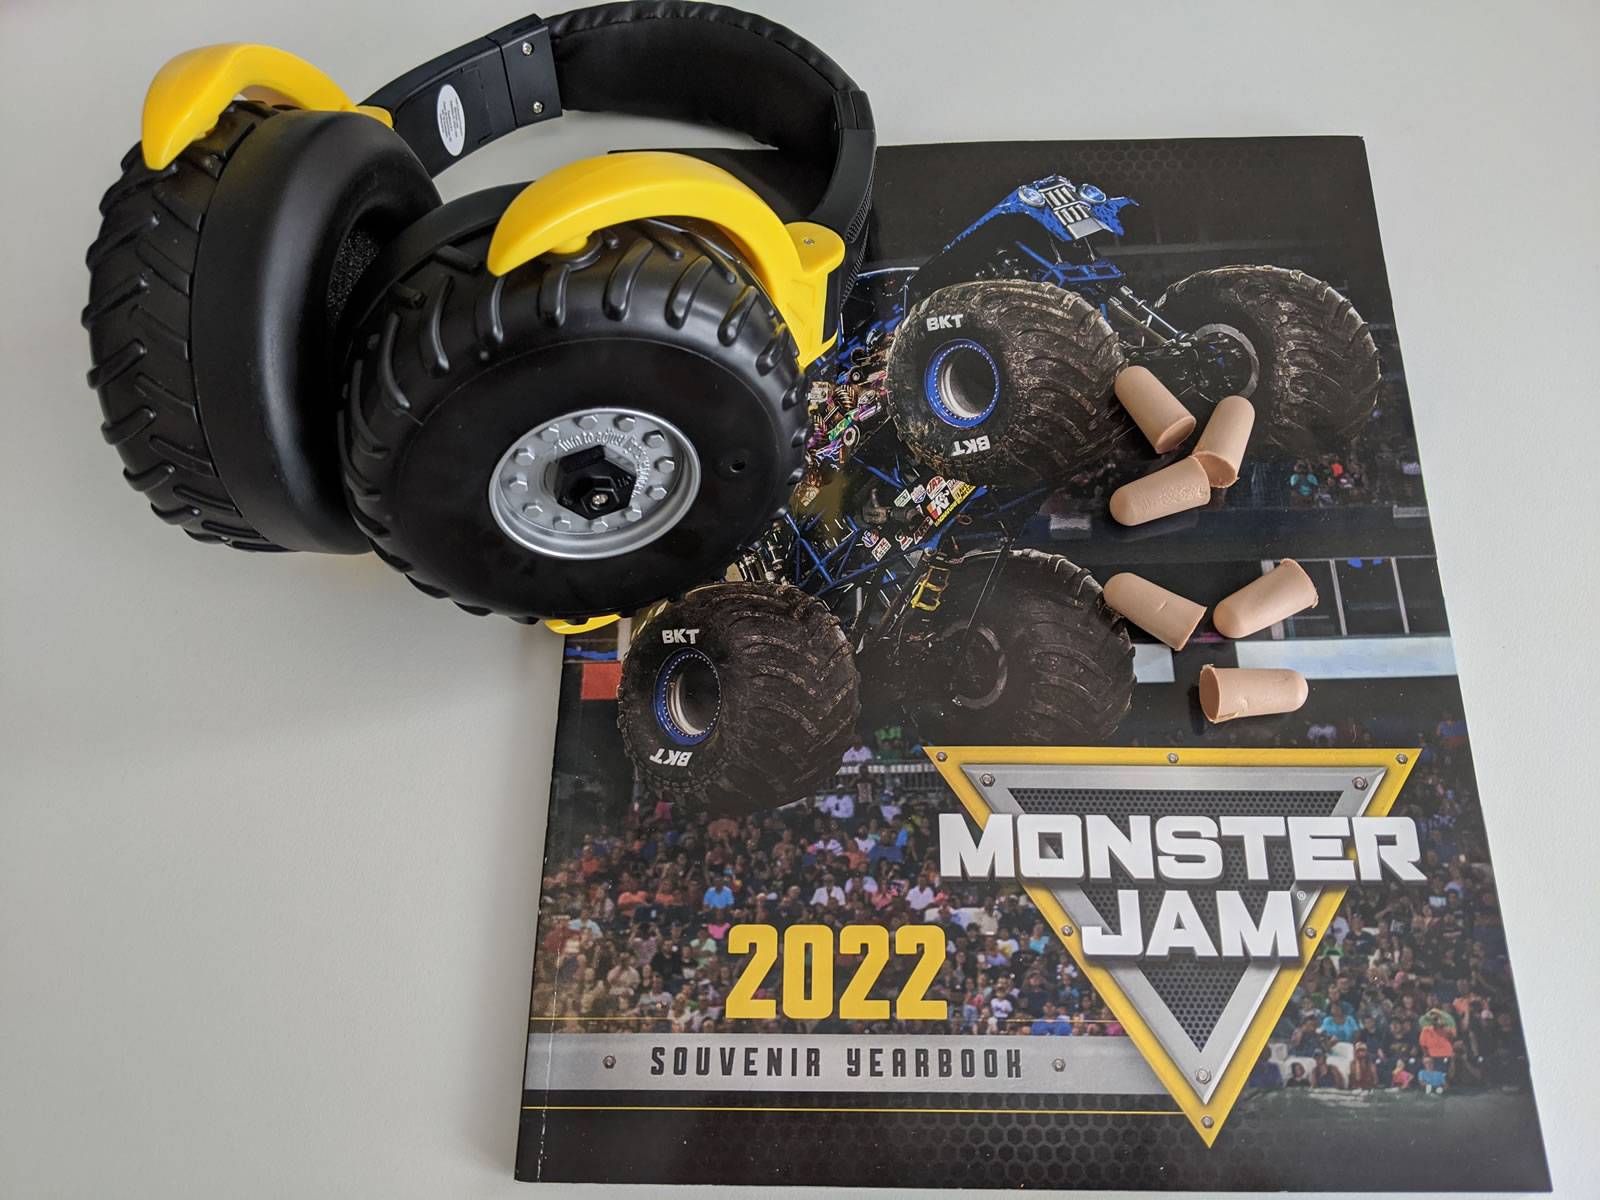 Monster Jam in Jacksonville: Bring your earplugs, it's gonna get loud